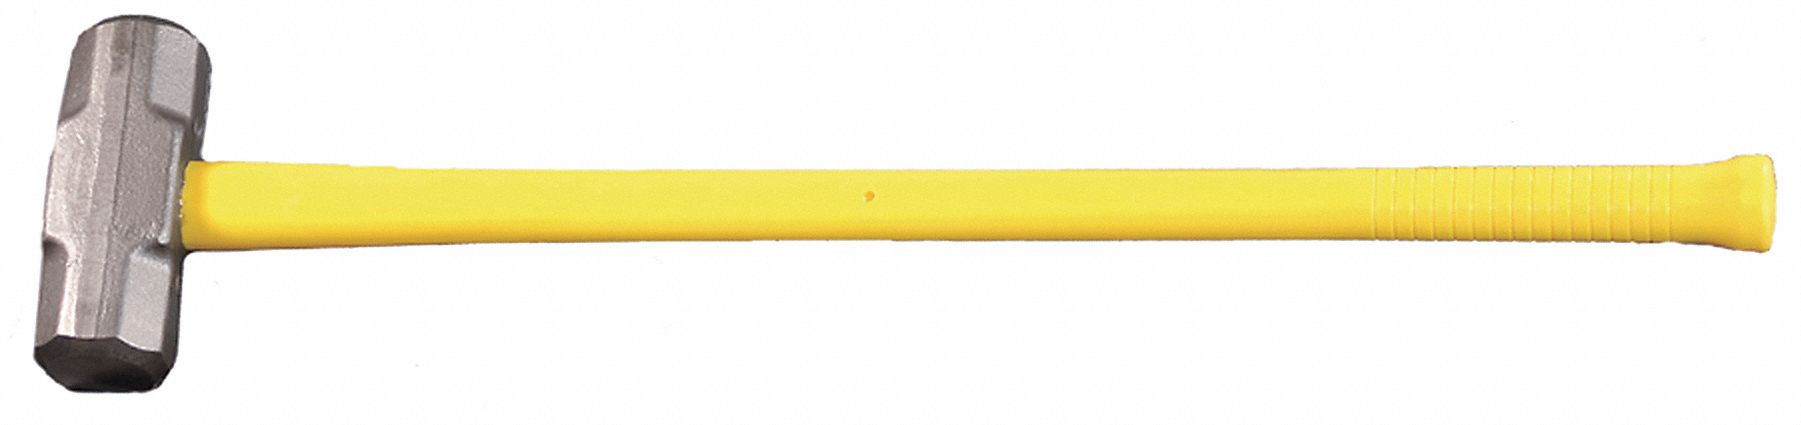 Double Face Sledge Hammer, 10 lb. Head Weight, 2-1/2" Head Width, 34" Overall Length